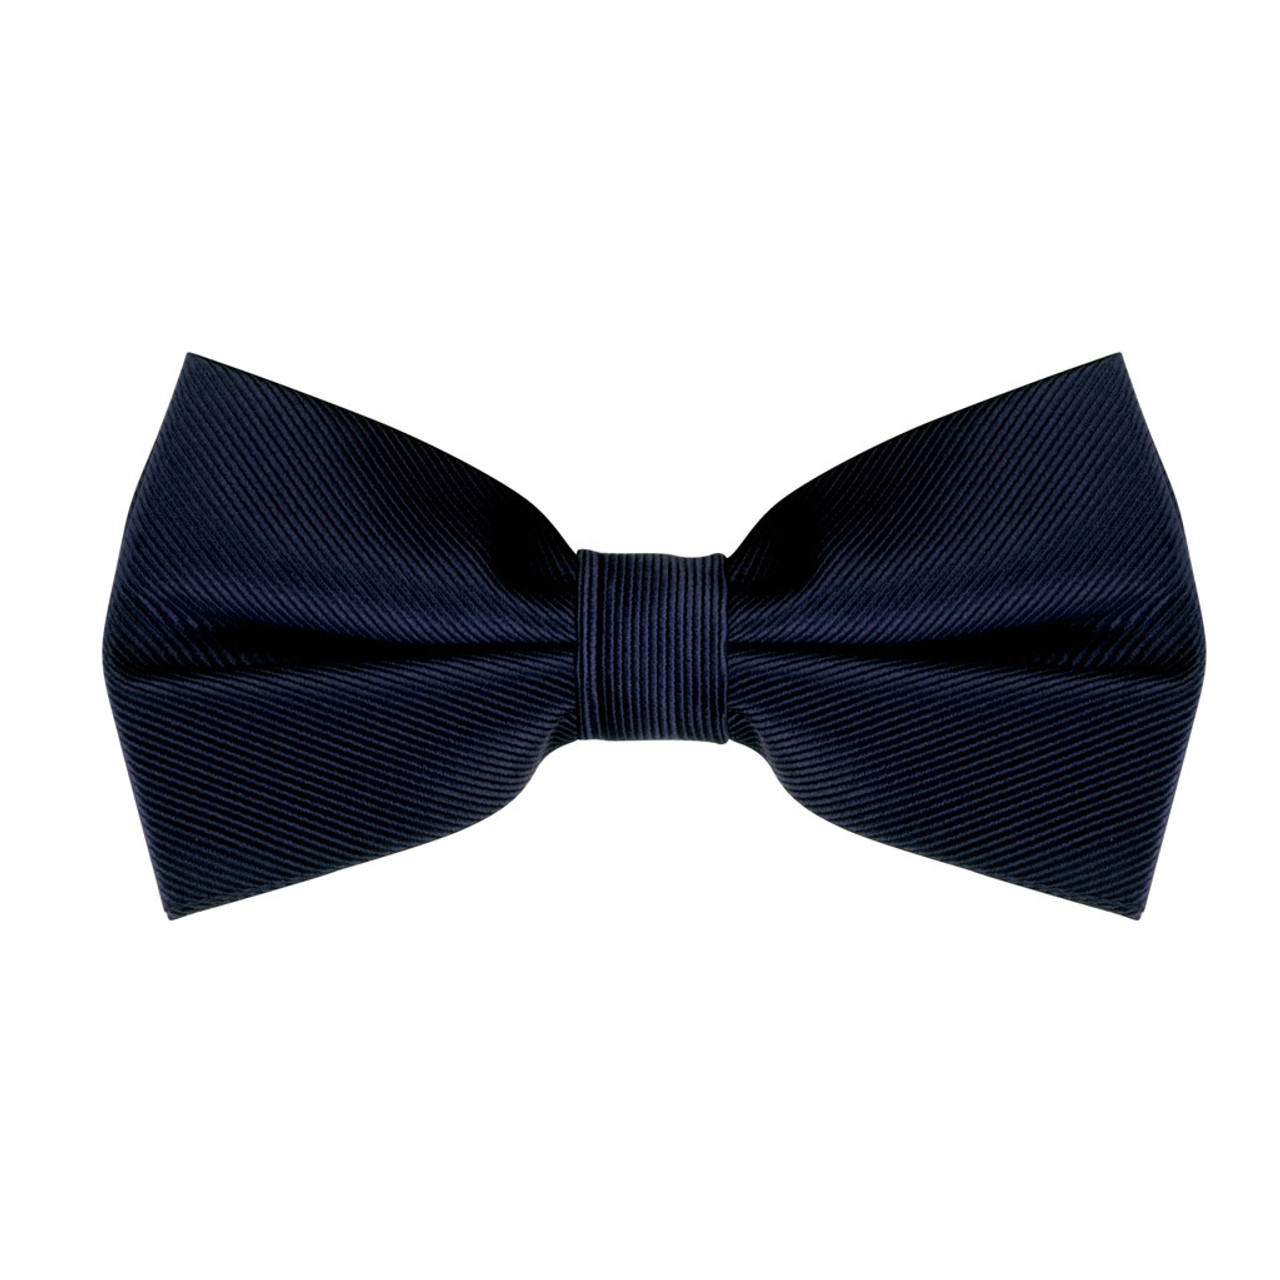 Black Suspenders & Royal Blue Bow Tie